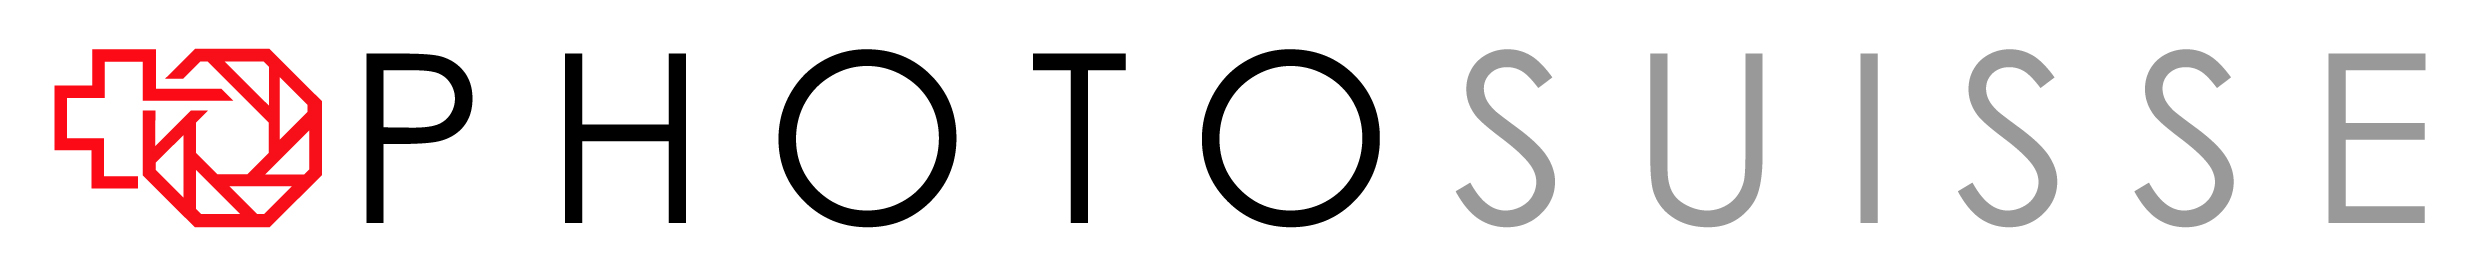 photosuisse logo